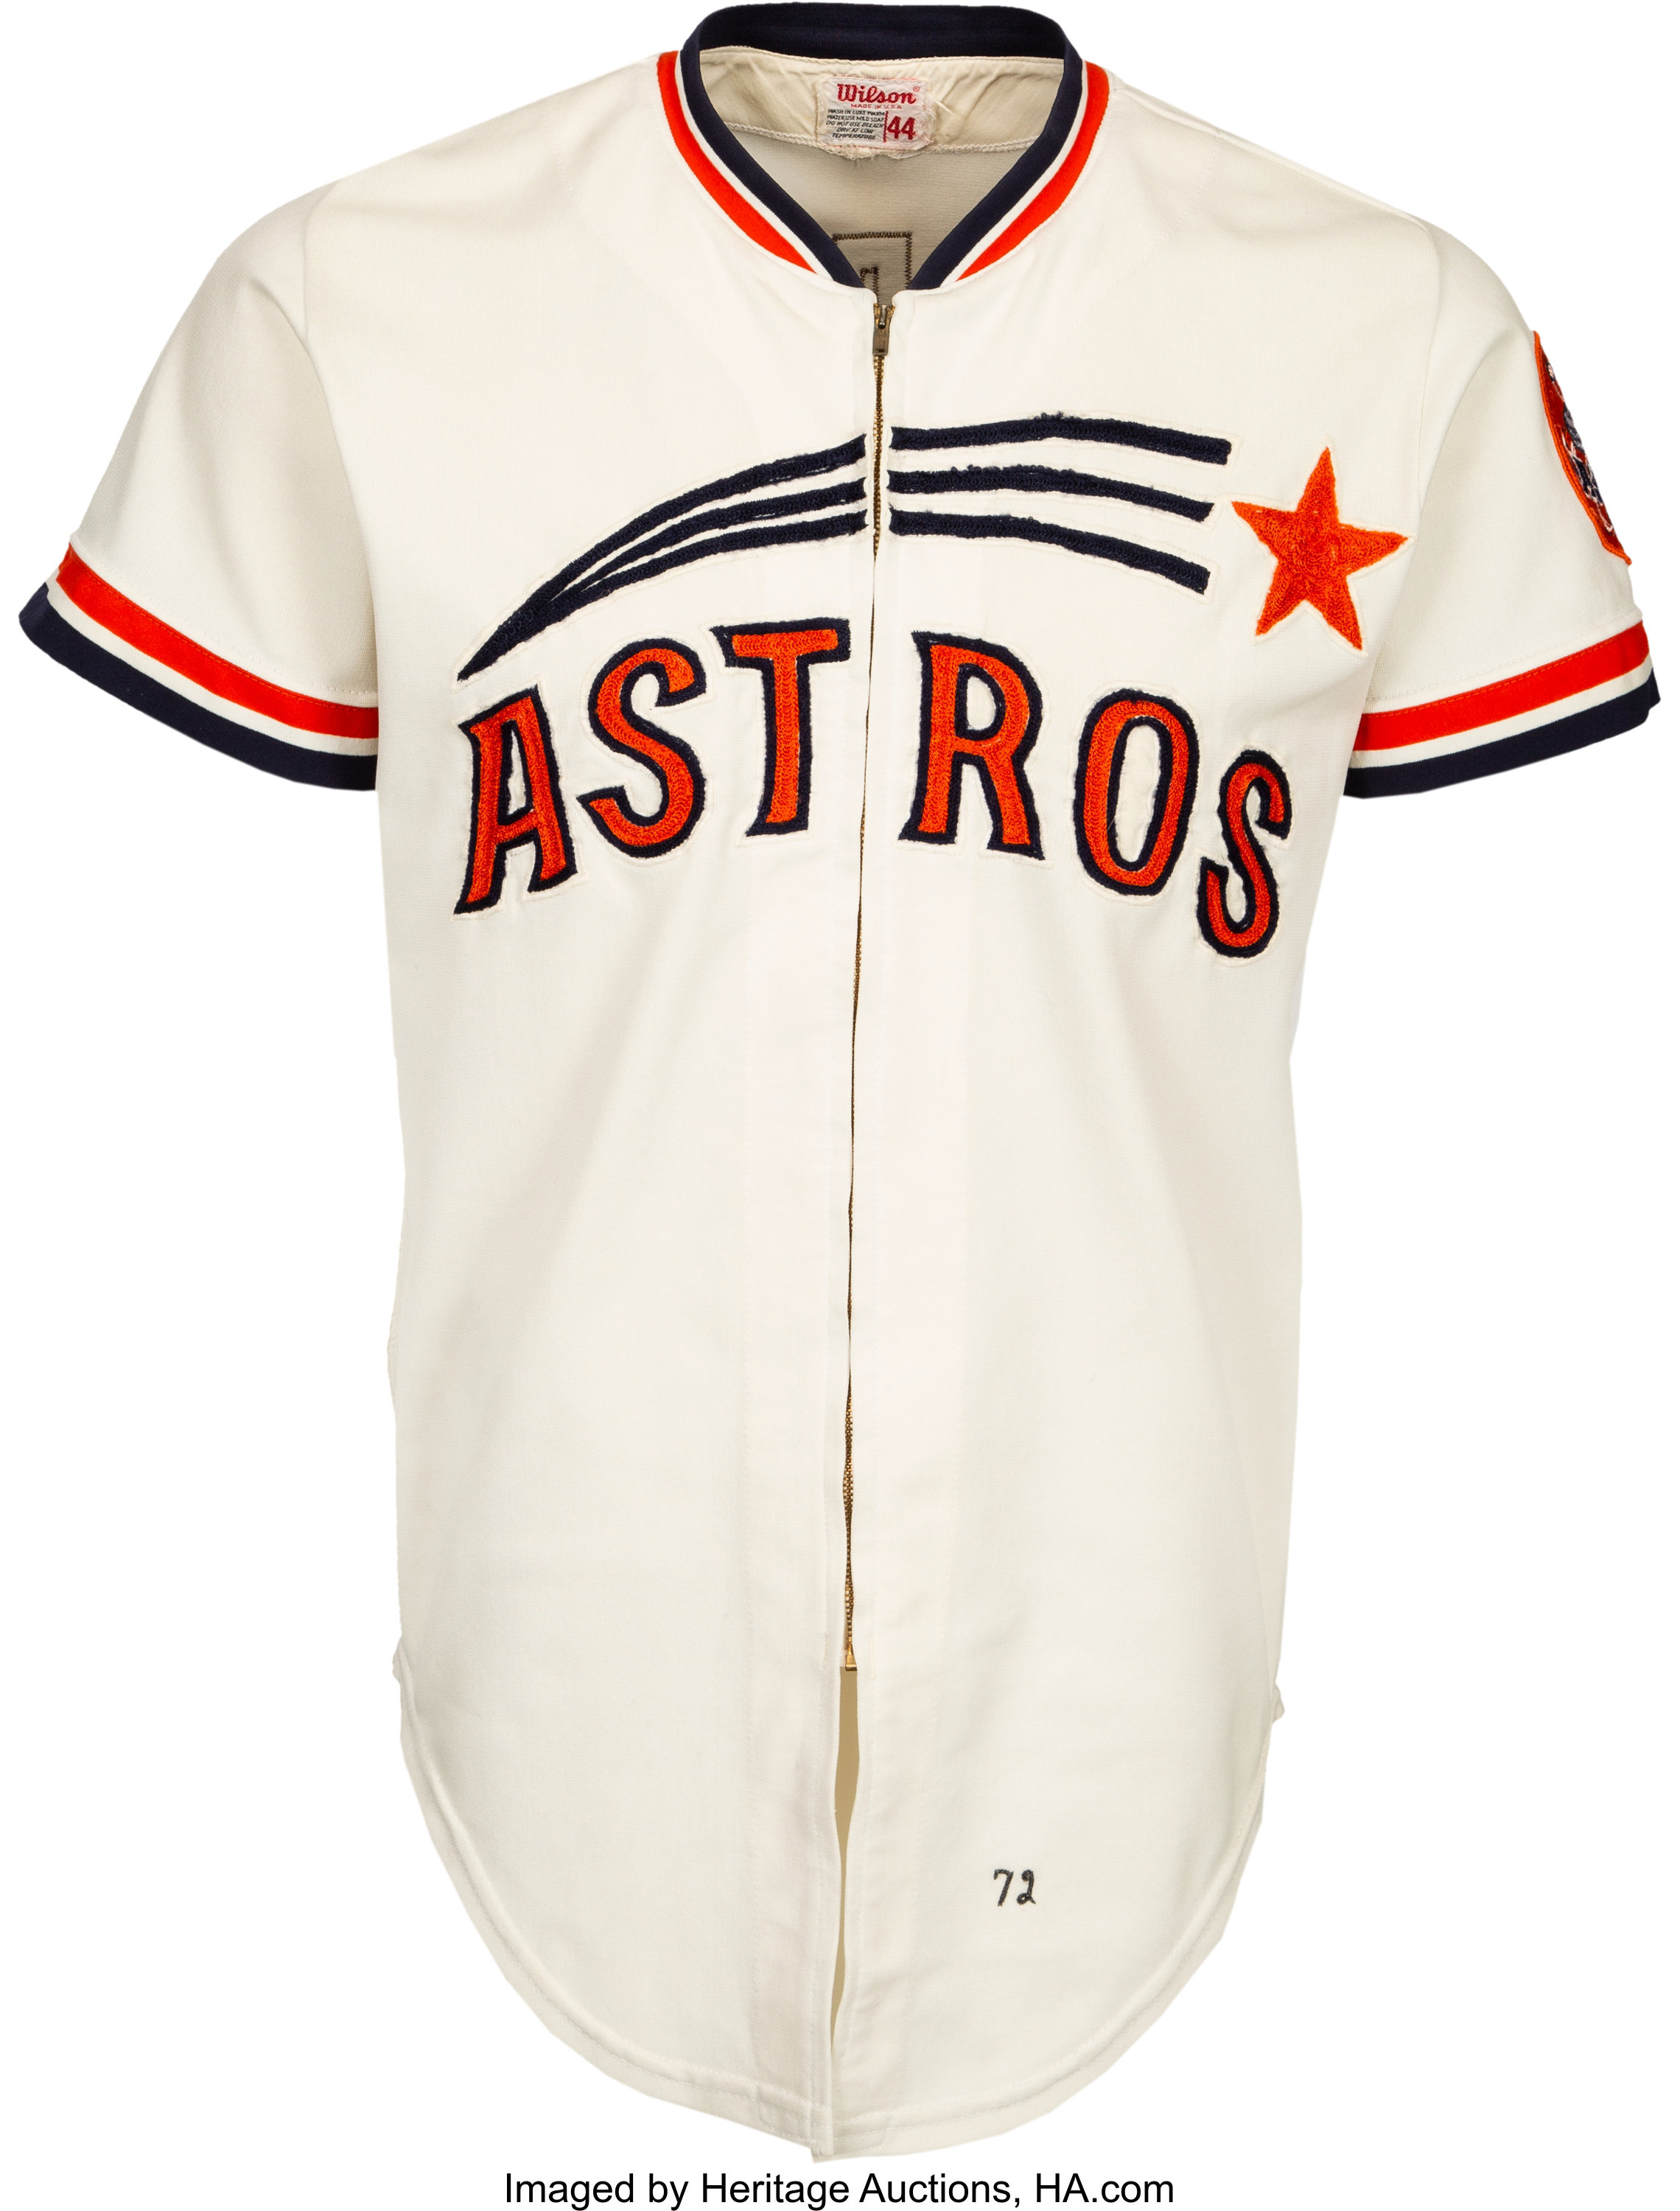 Houston "Astros" Retro NL Eagles Baseball Jersey by